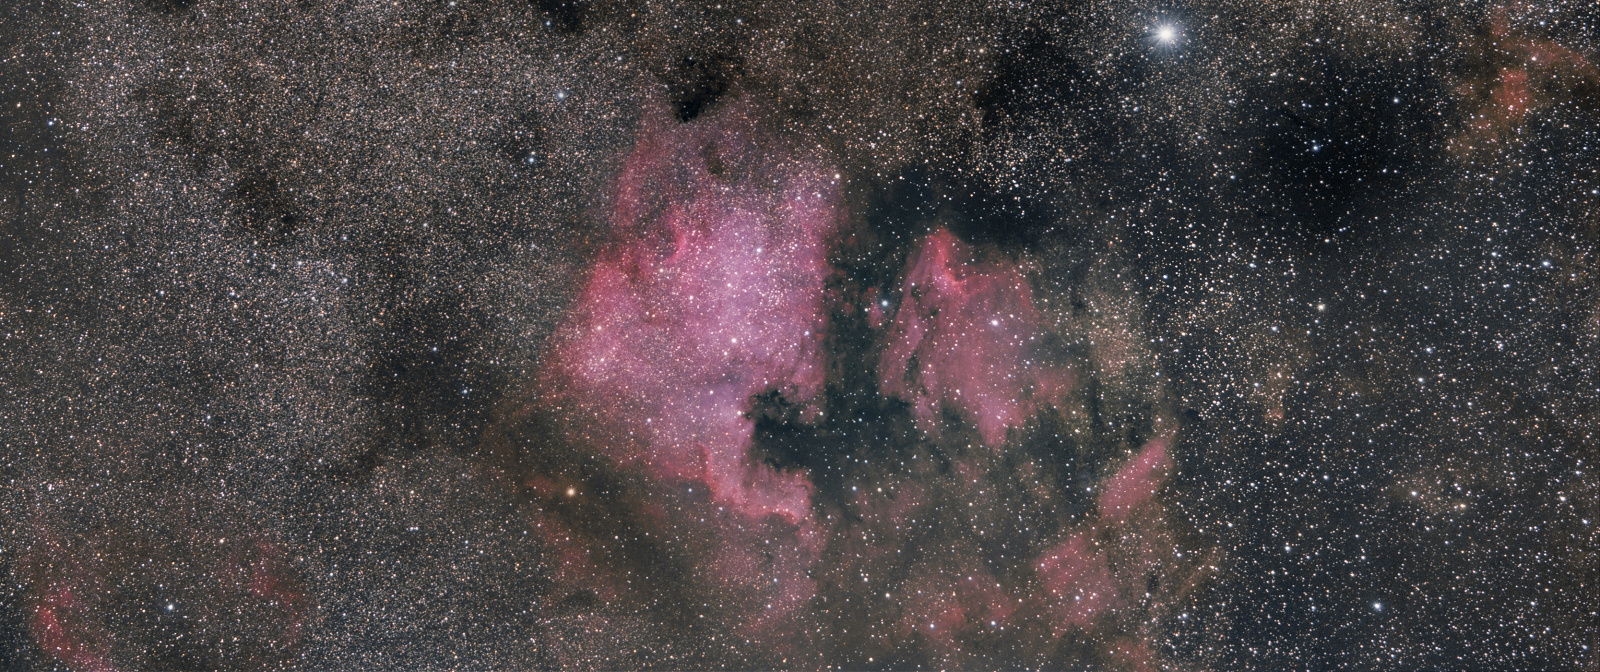 NGC_7000_finalversion_narrow_small.jpg